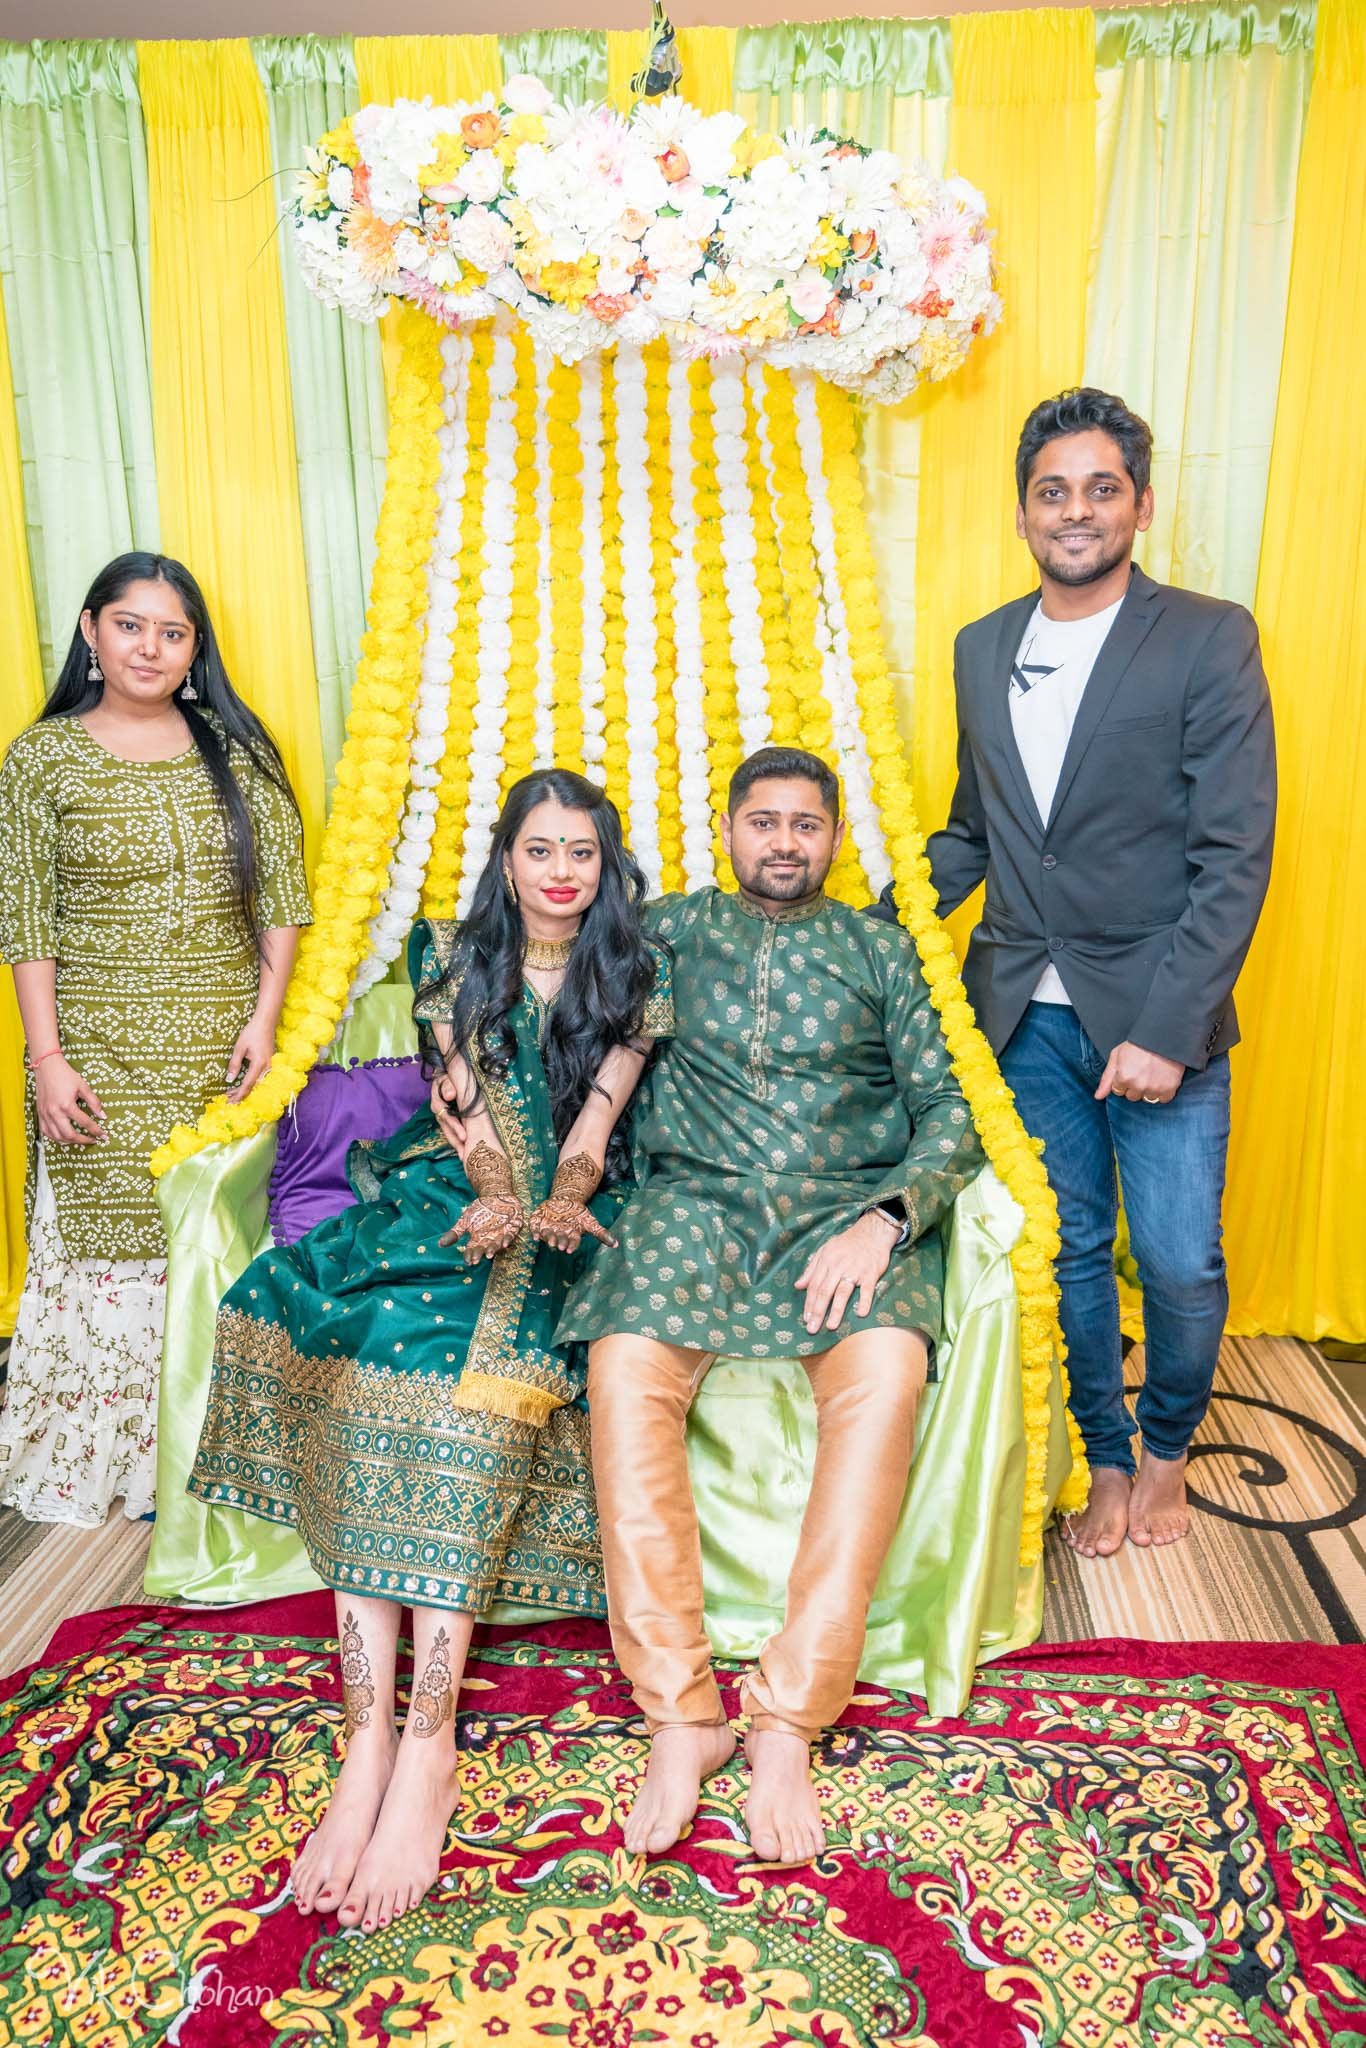 2022-02-03-Hely-&-Parth-Mendi-Indian-Wedding-Vik-Chohan-Photography-Photo-Booth-Social-Media-VCP-120.jpg